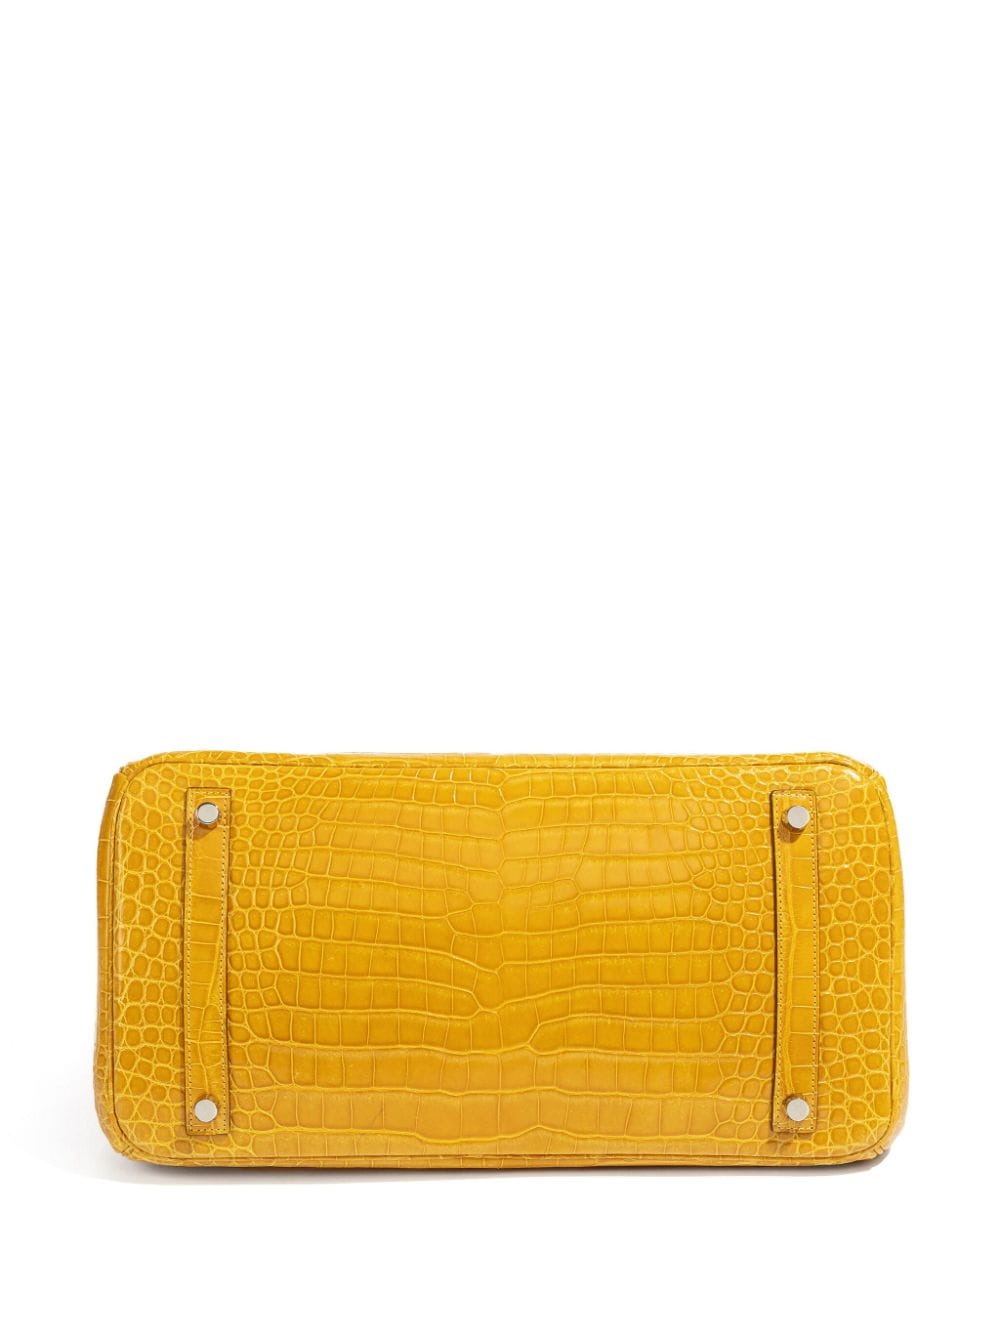 Pre-owned Hermes 2010  Birkin 35 Handbag In Yellow